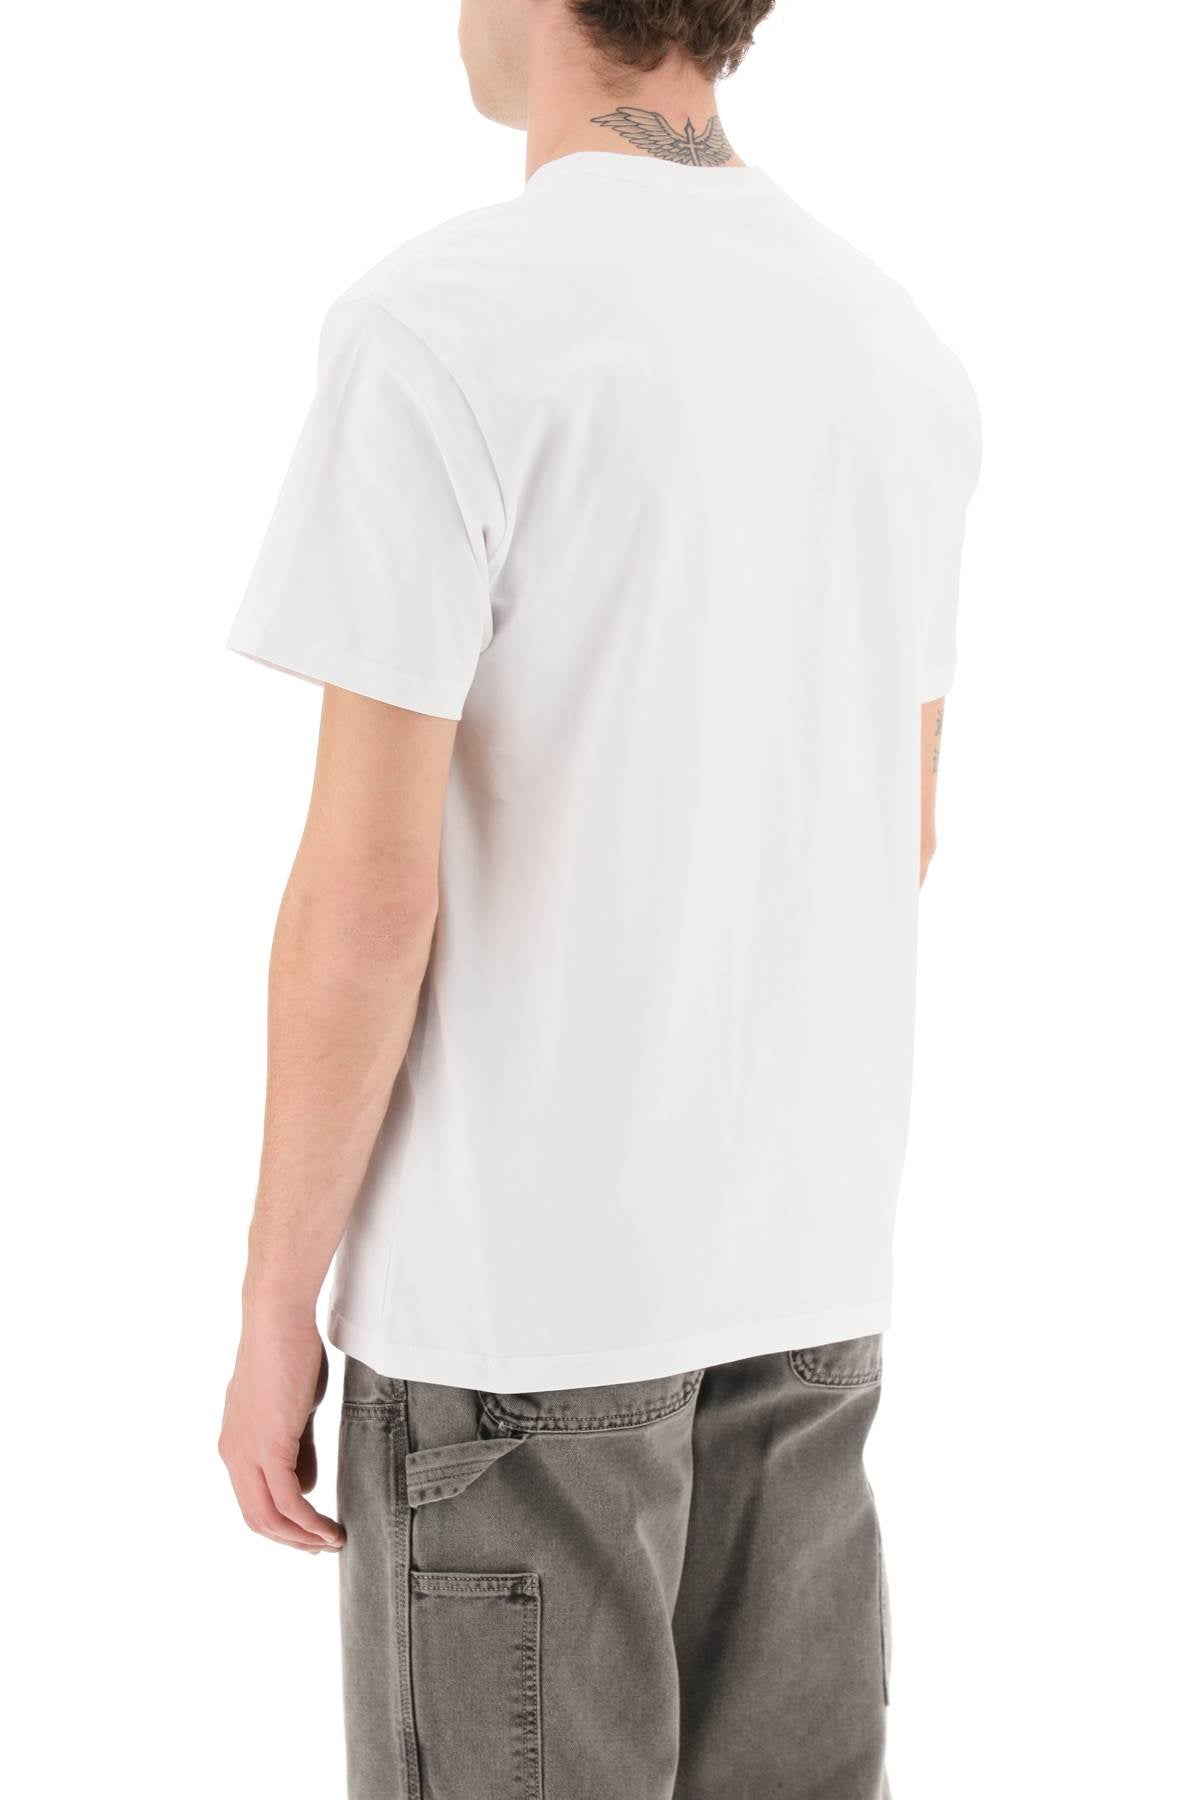 Carhartt wip chase oversized t-shirt-2